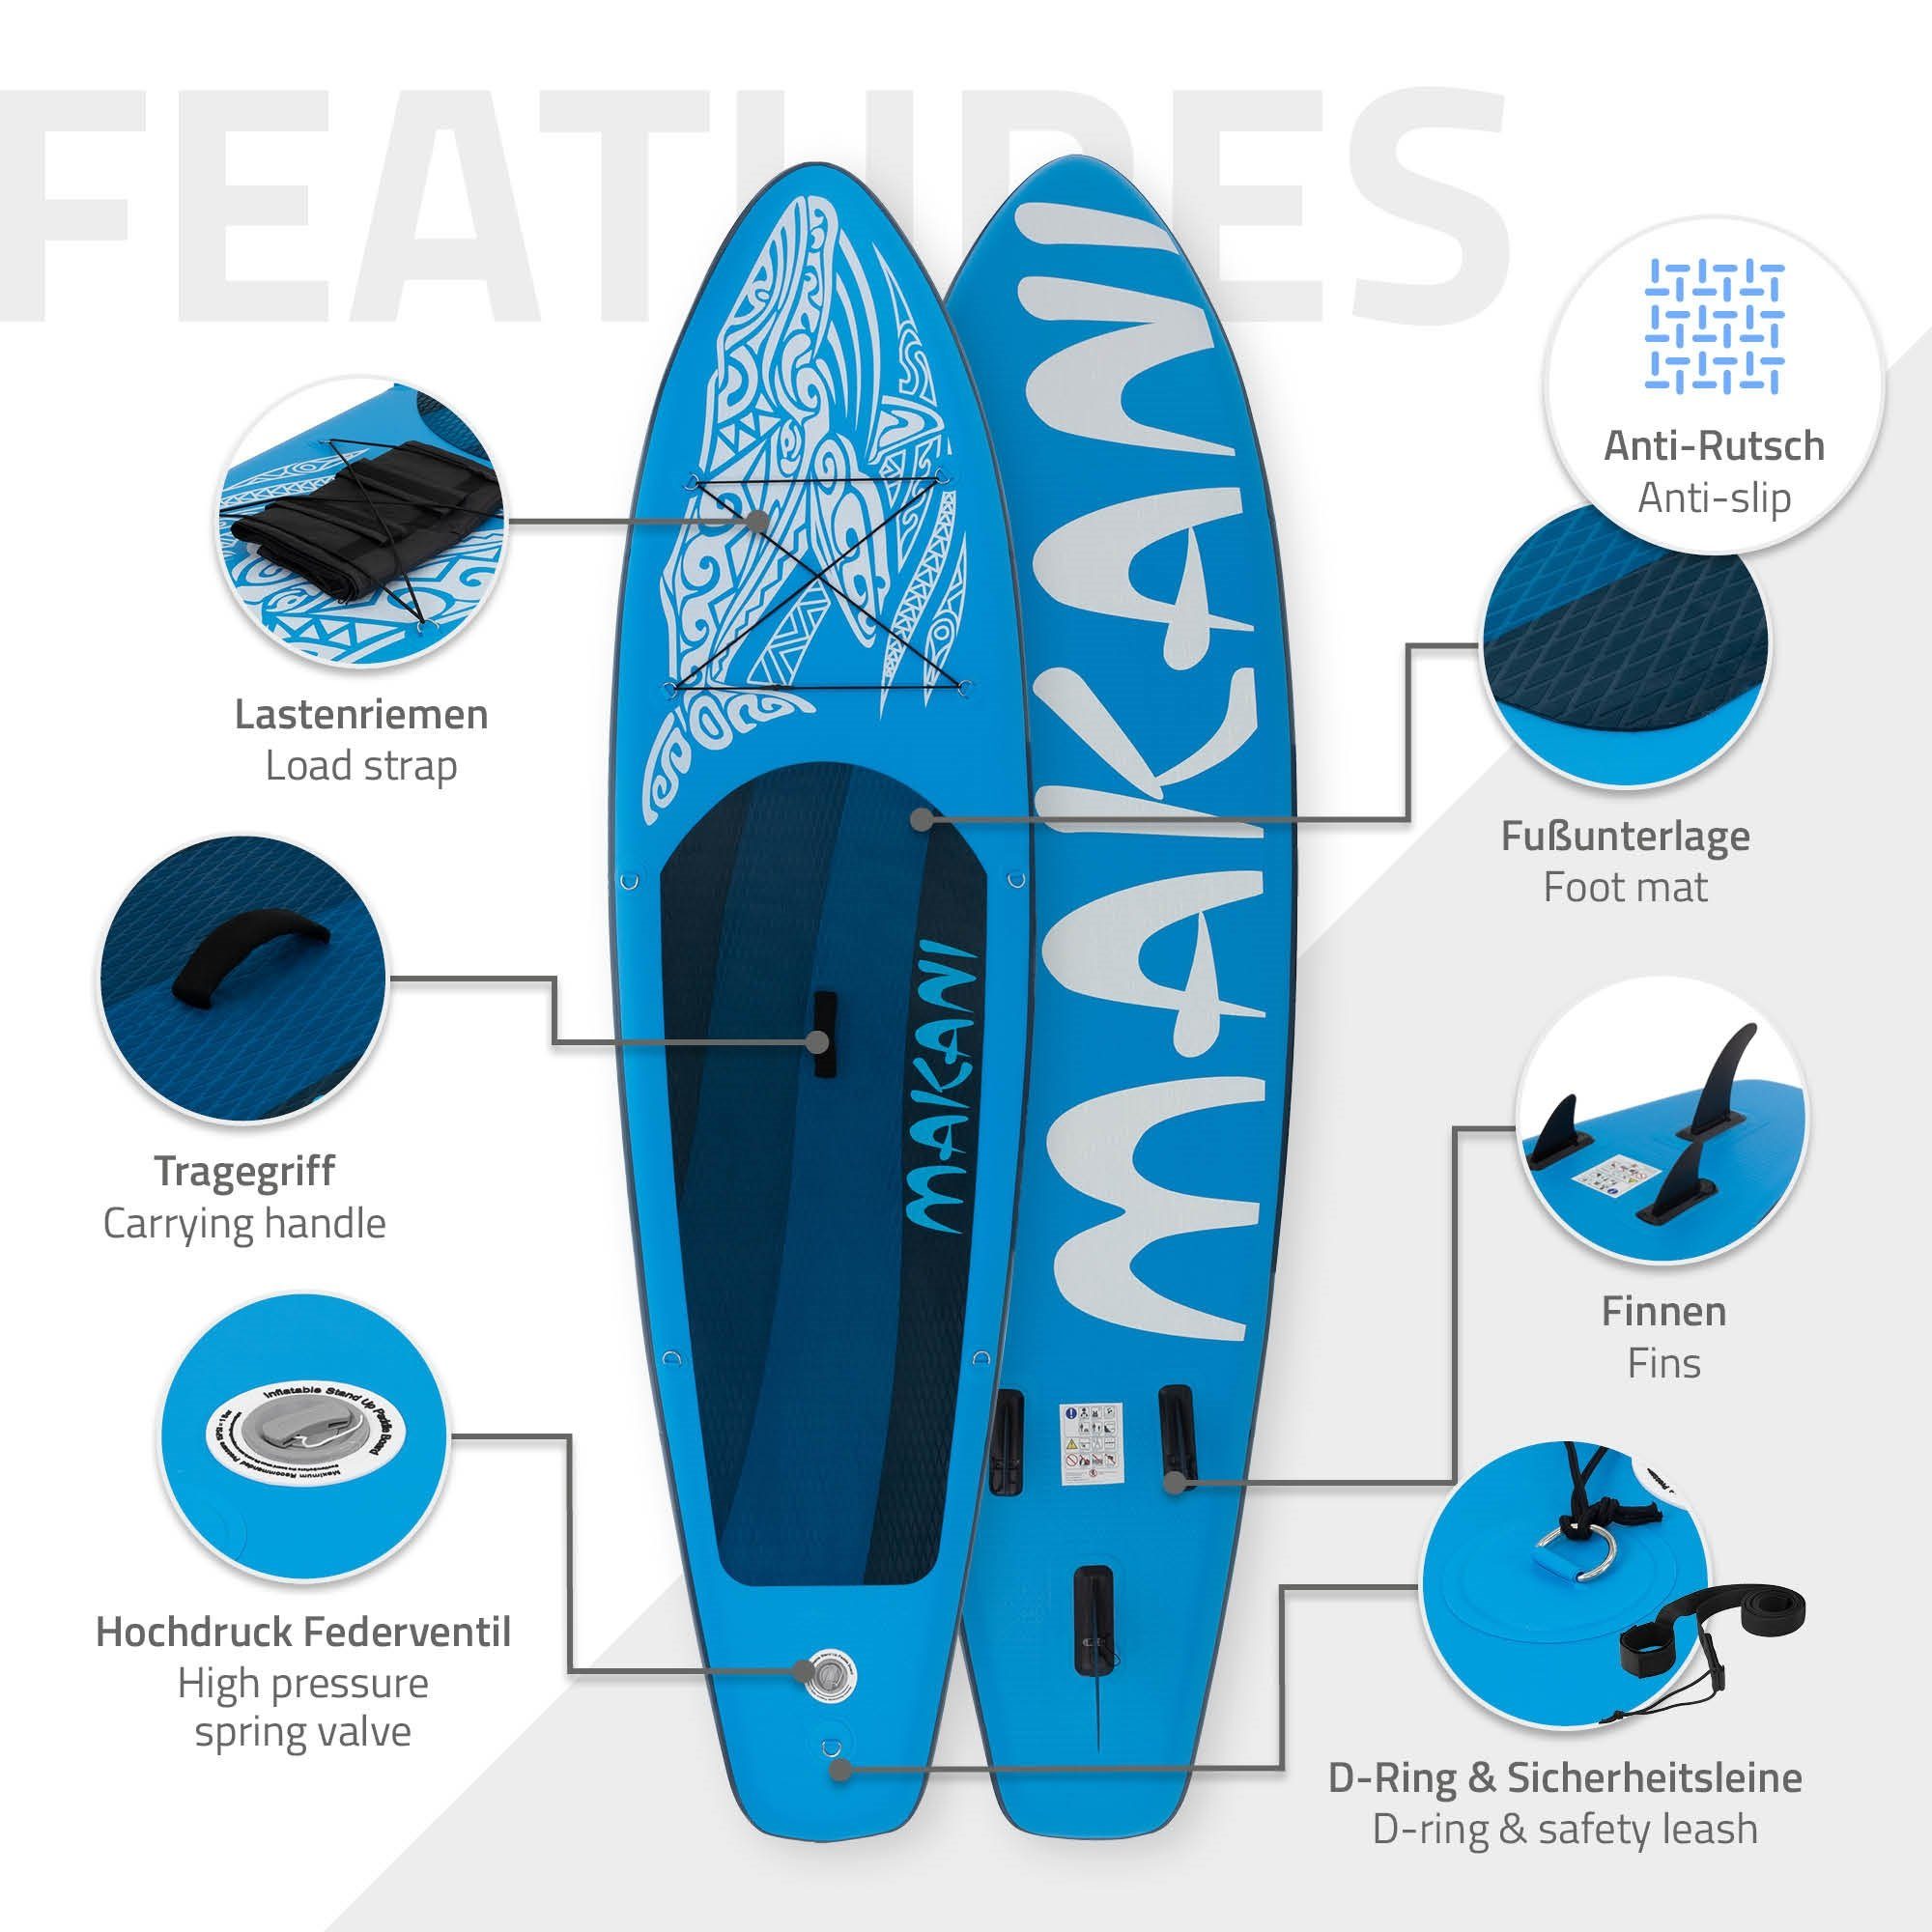 SUP-Board ECD Germany Paddle Blau Surfboard, Up Aufblasbares 320x82x15cm Pumpe Zubehör Board Makani Stand bis 150 kg PVC Tragetasche